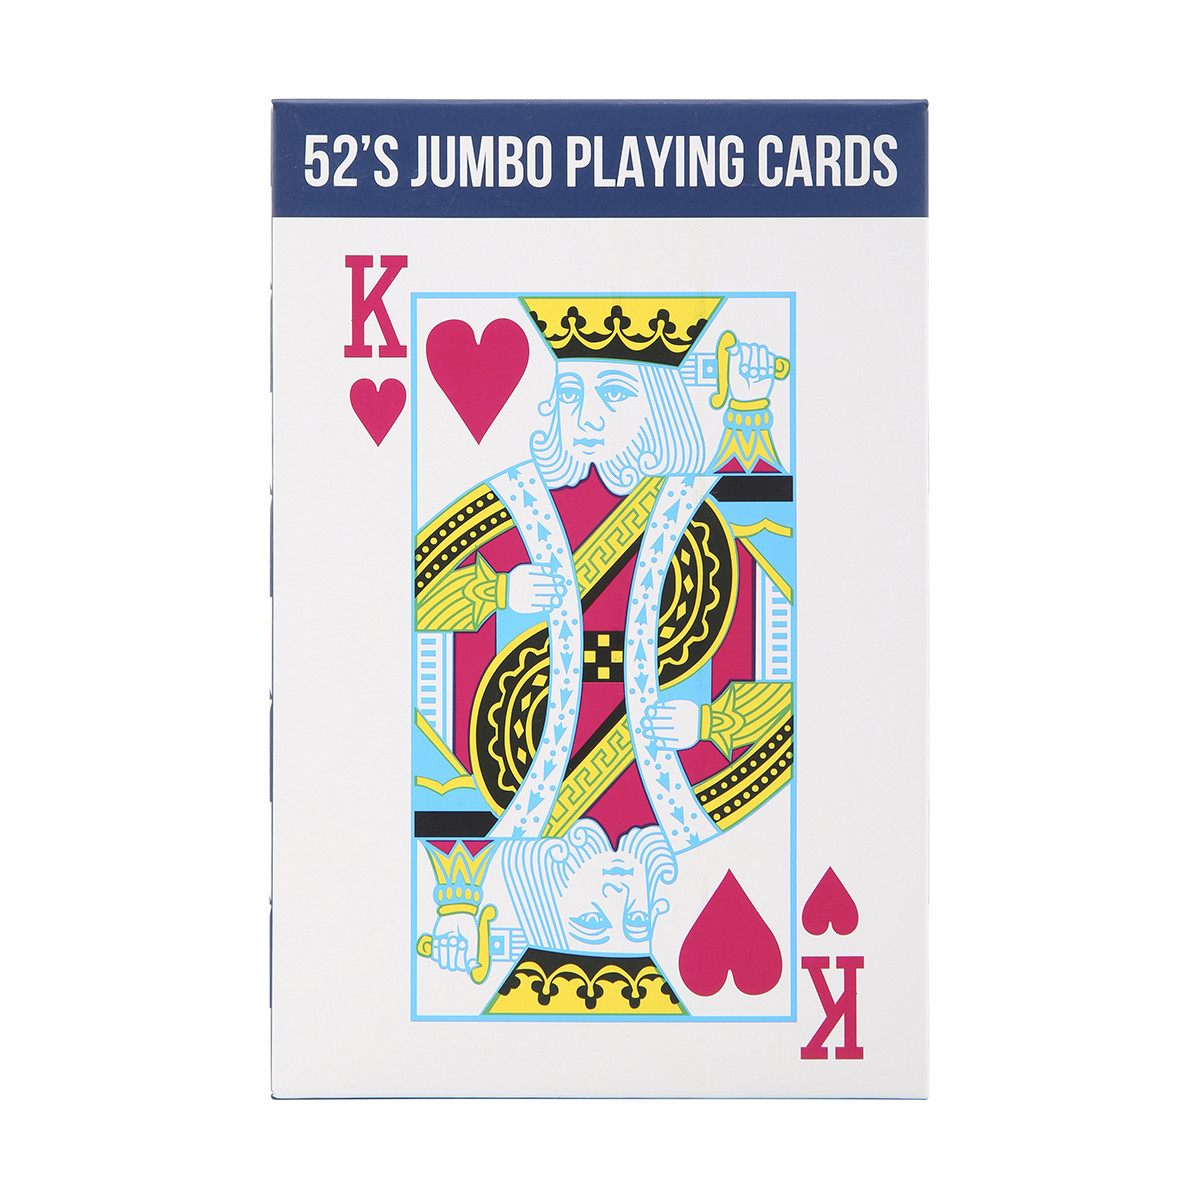 52's Jumbo Playing Cards